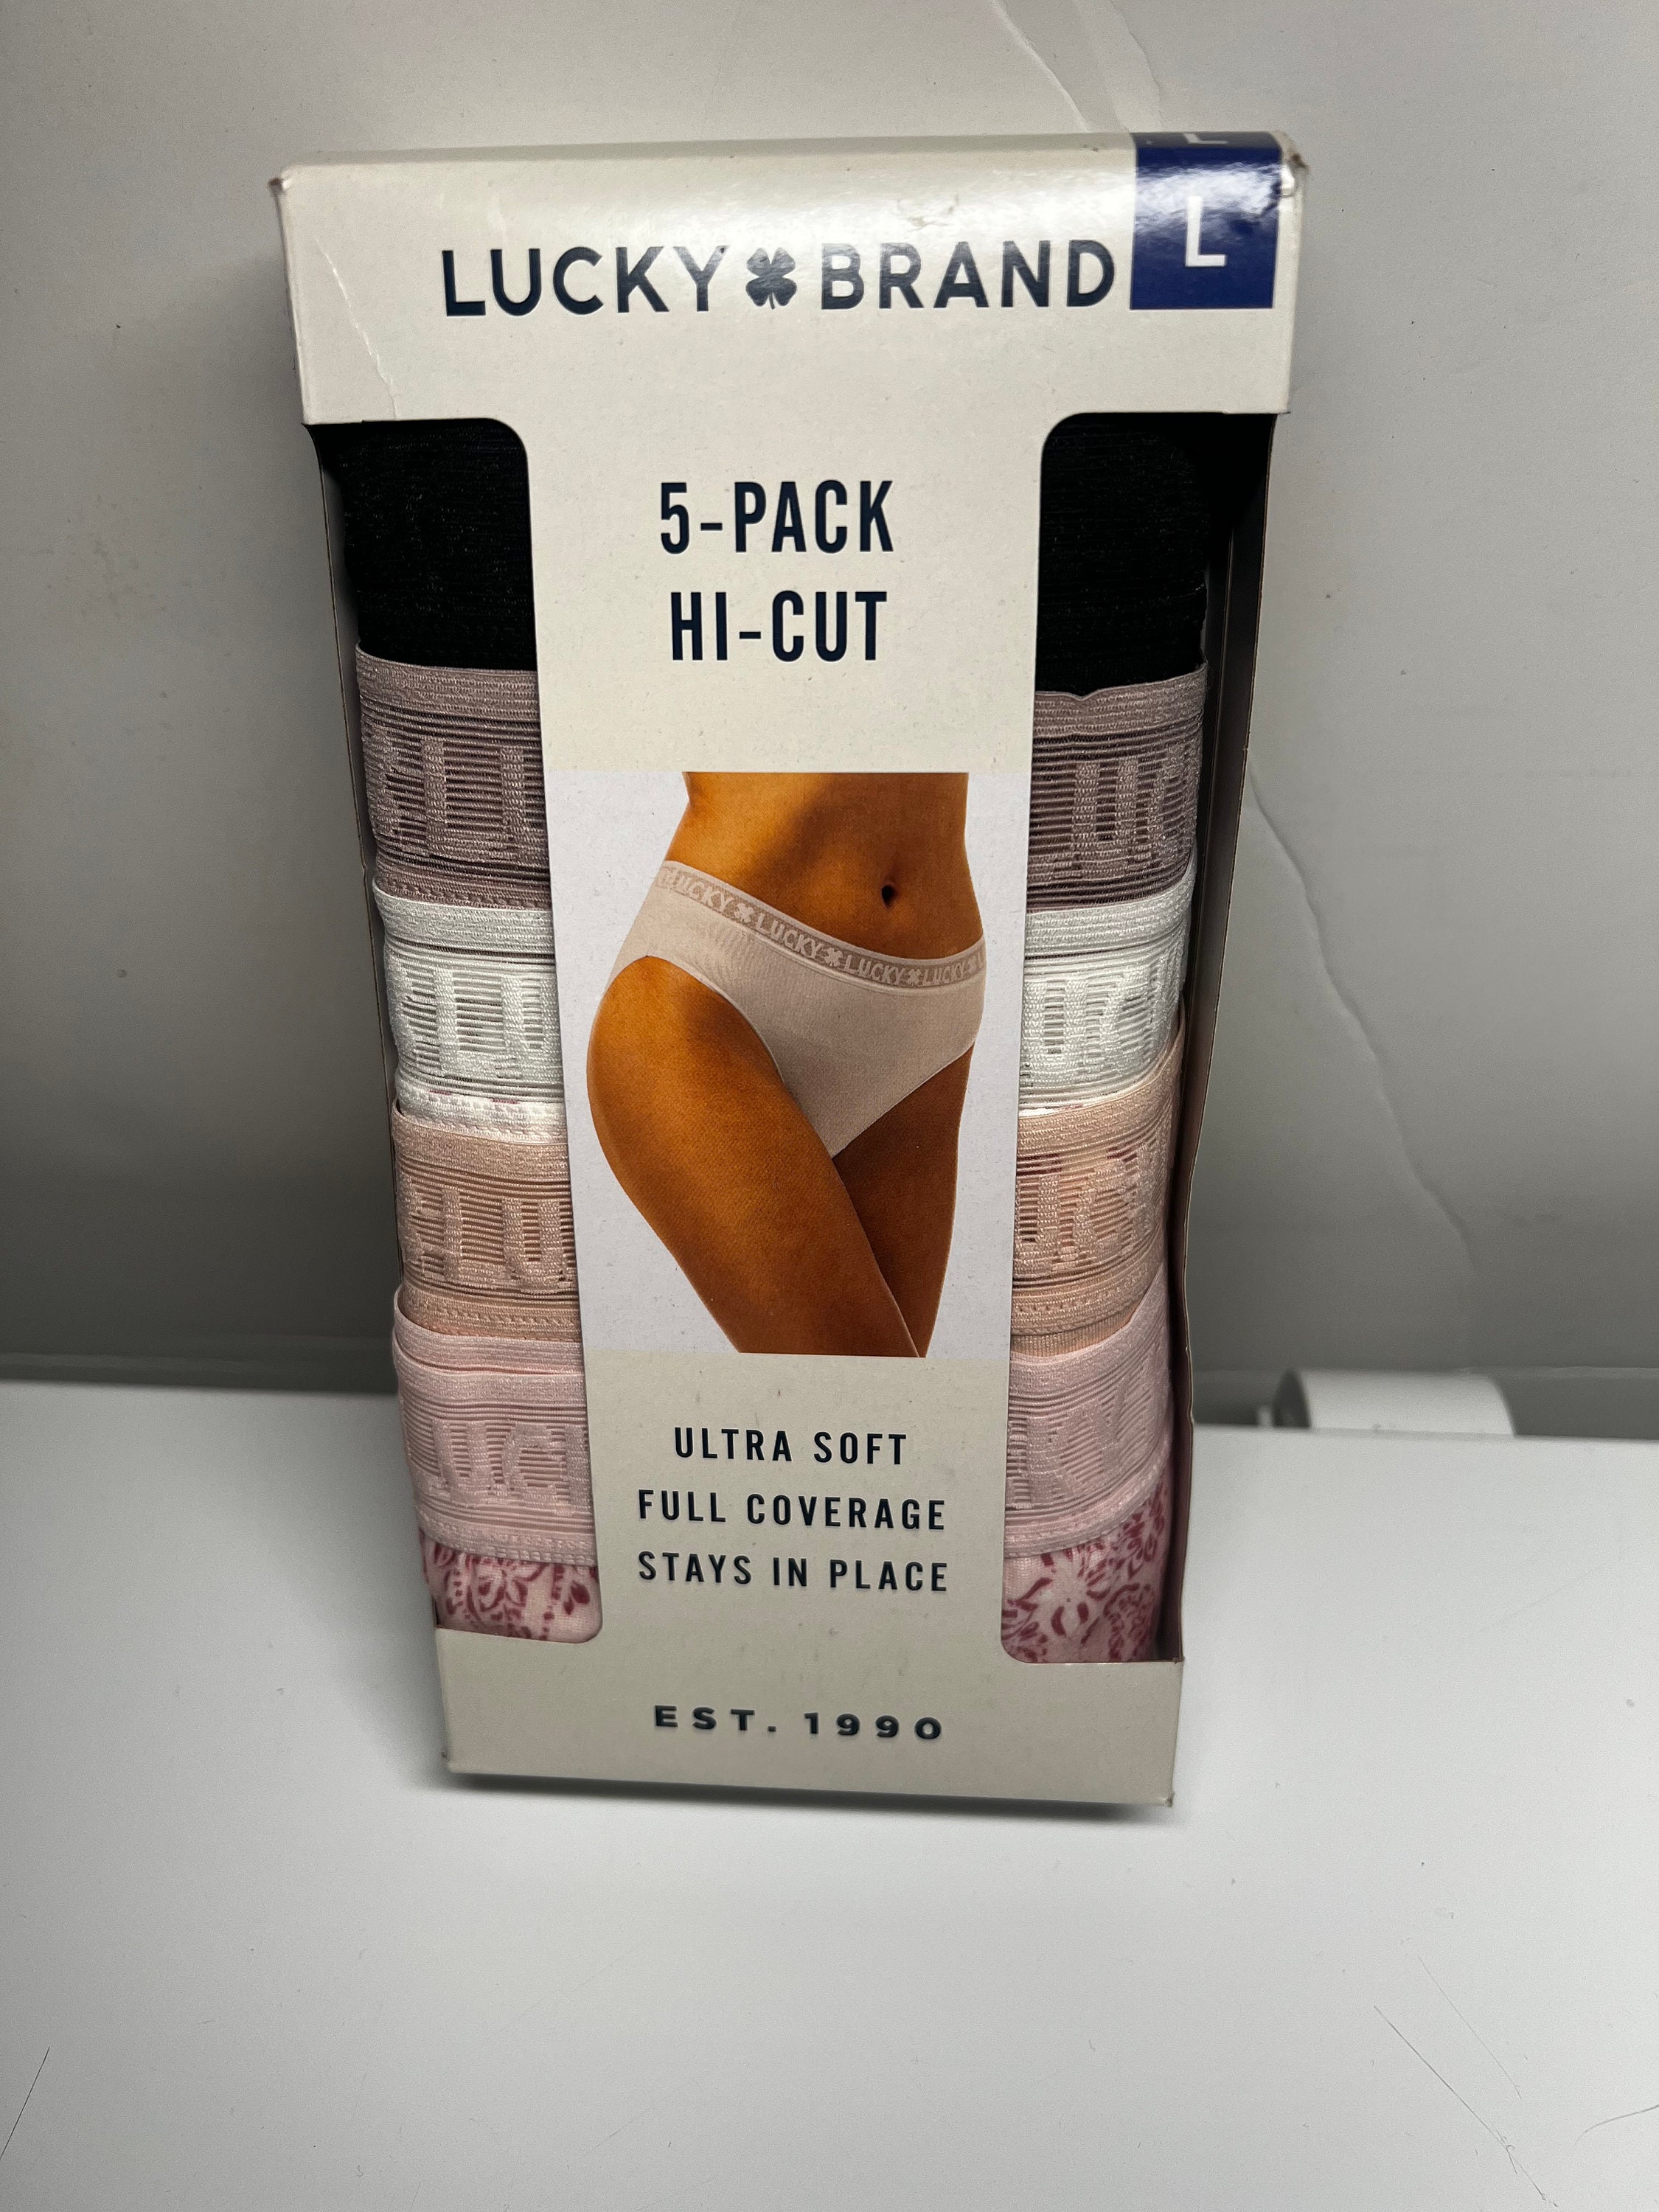 Lucky Brand Hi Cut Underwear New in Box Large 